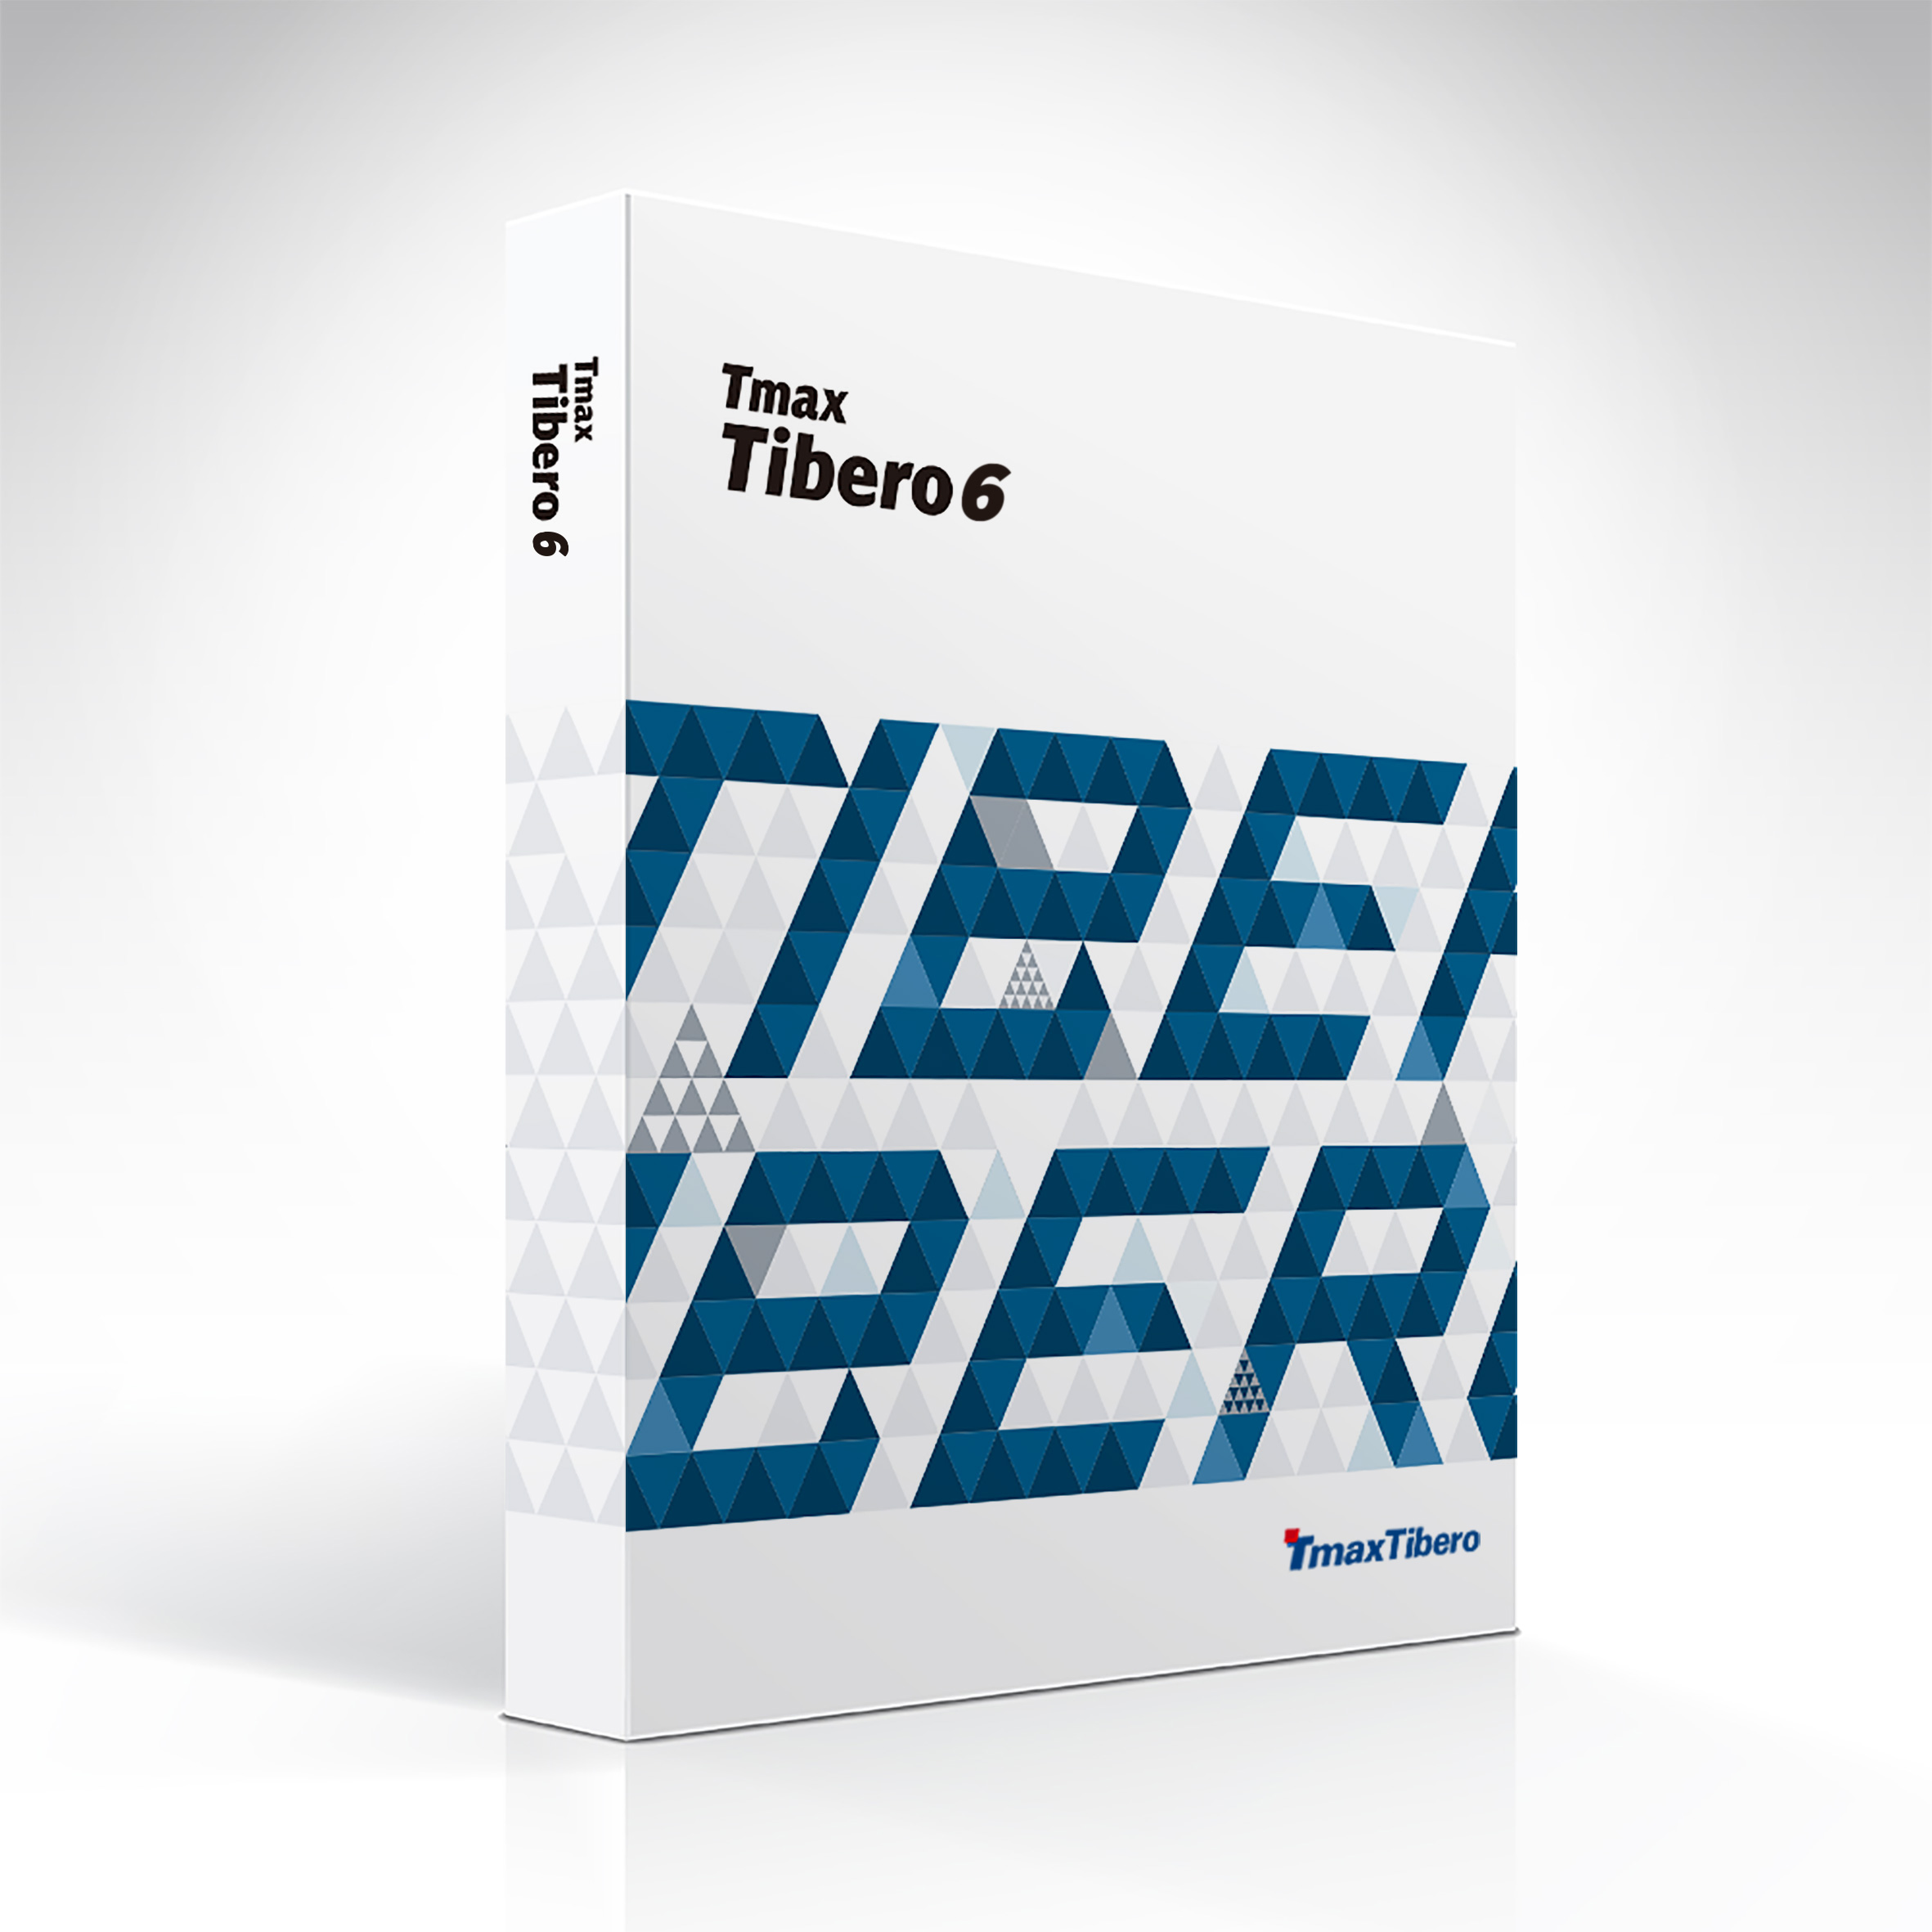 Tibero6_20x20cm.jpg